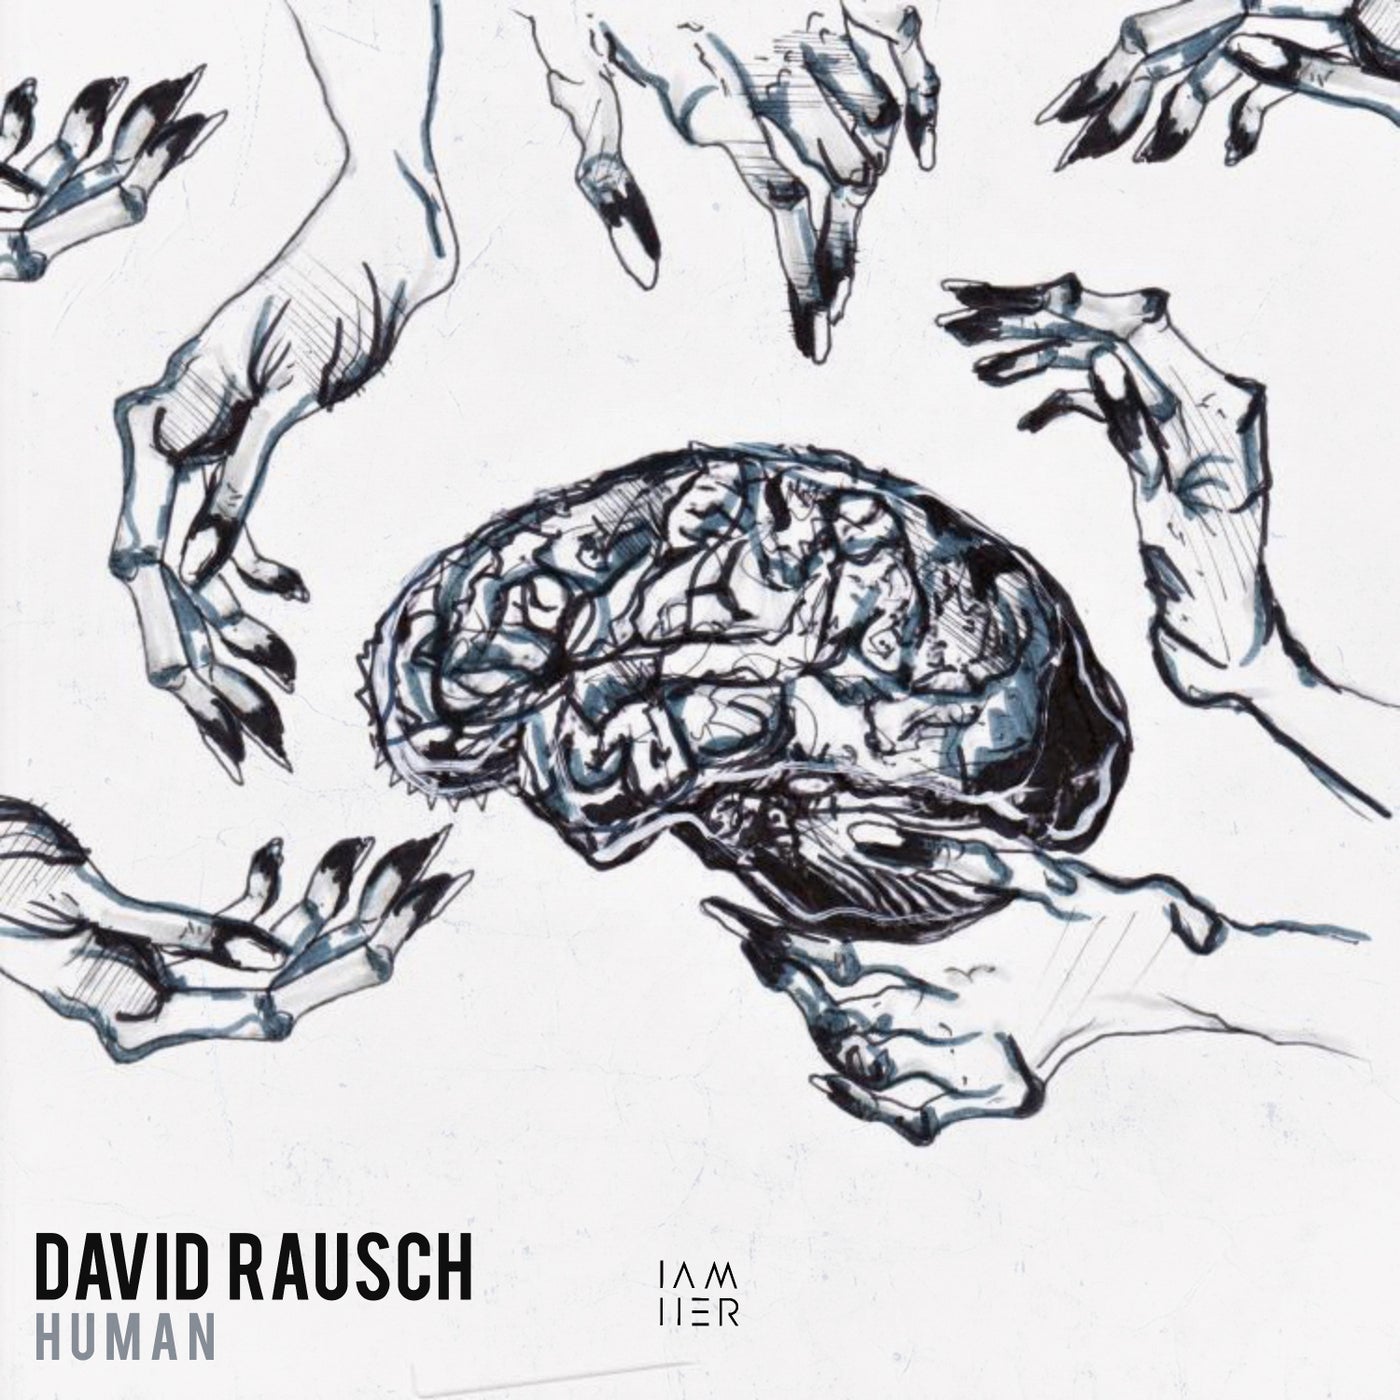 David Rausch – Human [IAMHERX032]